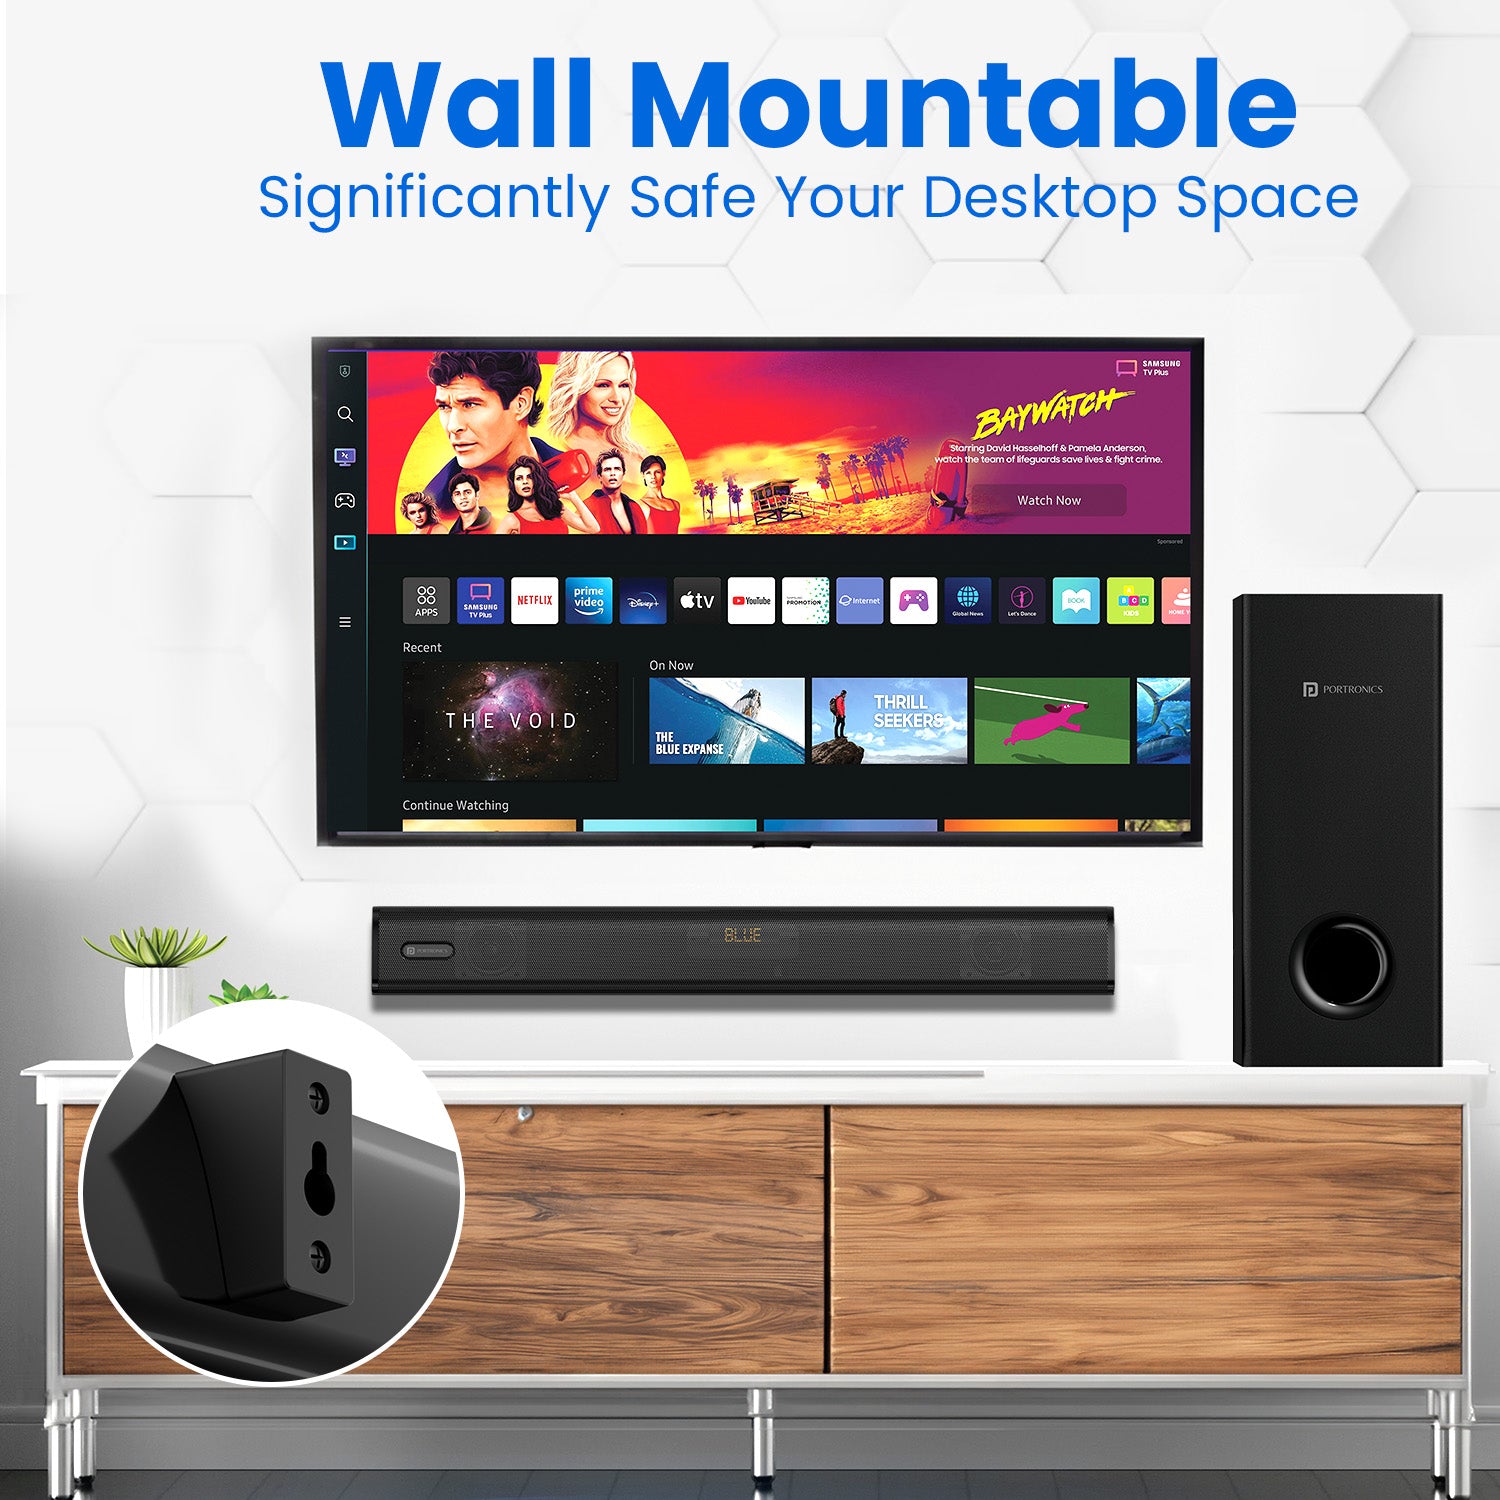 Black Portronics Pure Sound 106 120w Bluetooth sound bar comes with wall mount